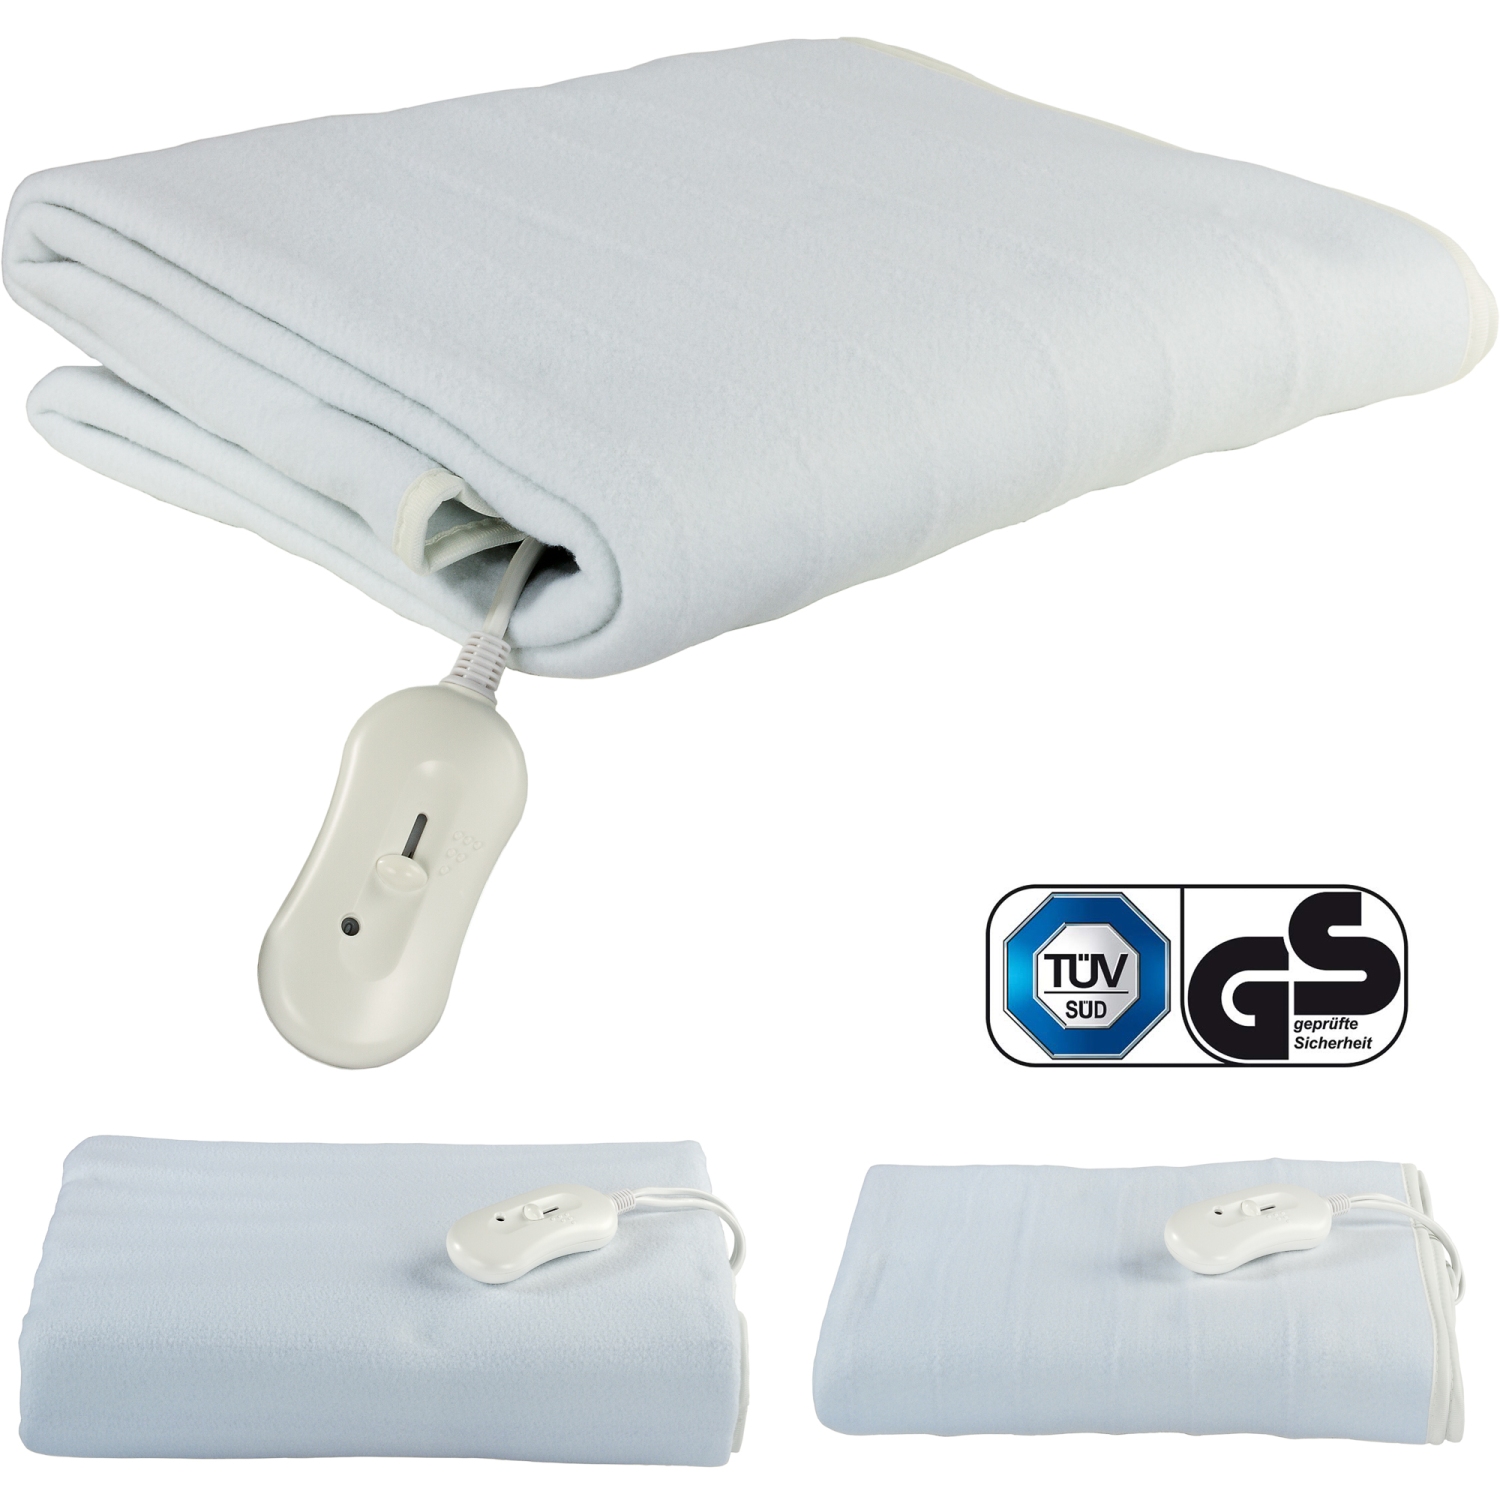 Chauffe matelas XXL couvertures chauffantes 190 x 80 cm chauffage pad